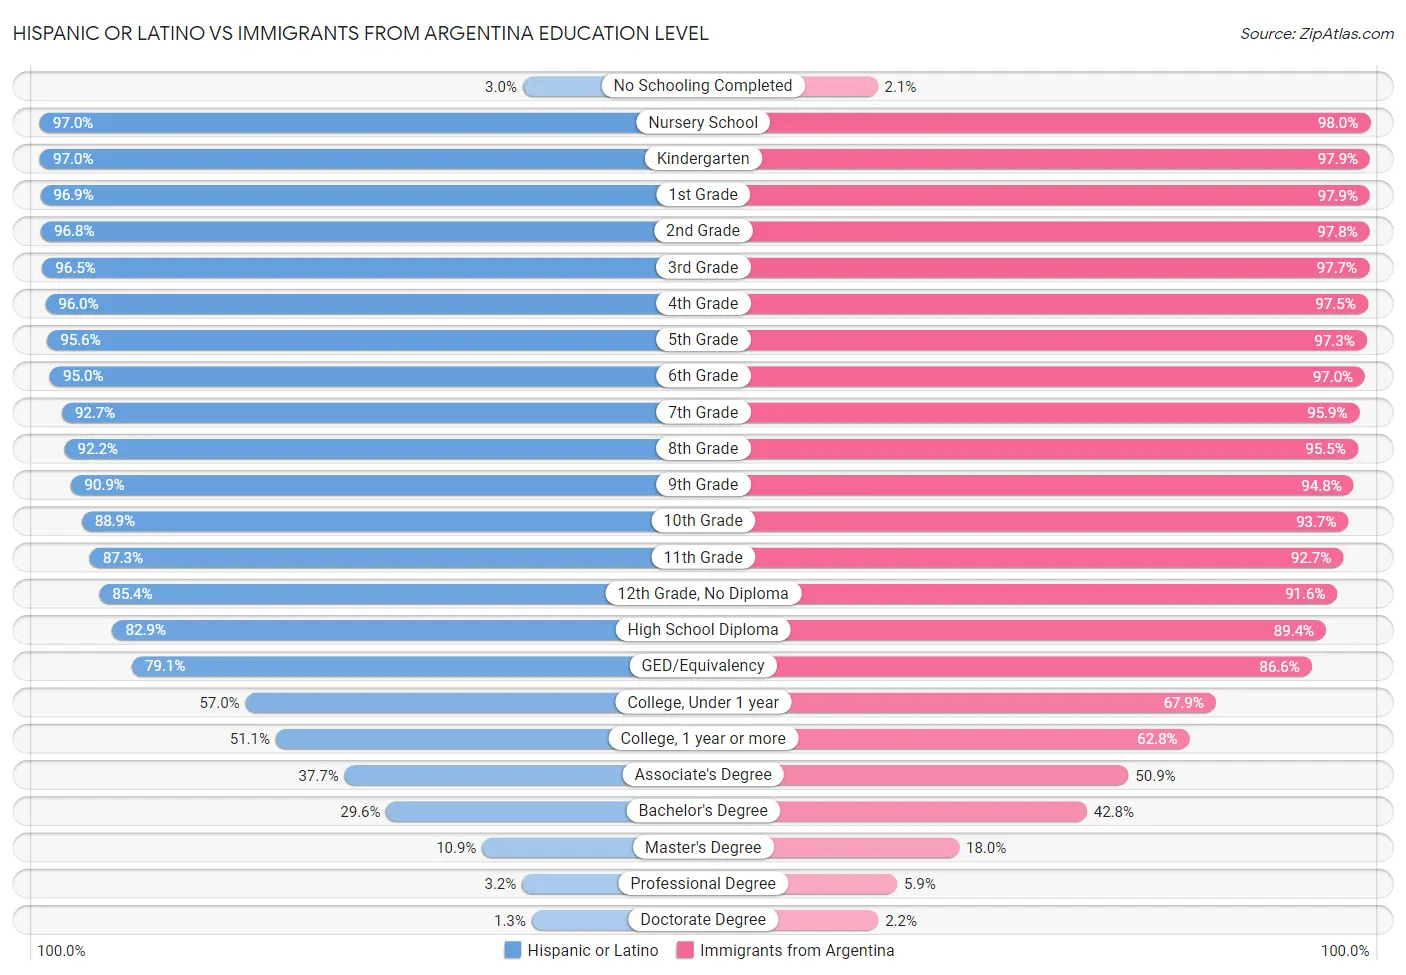 Hispanic or Latino vs Immigrants from Argentina Education Level